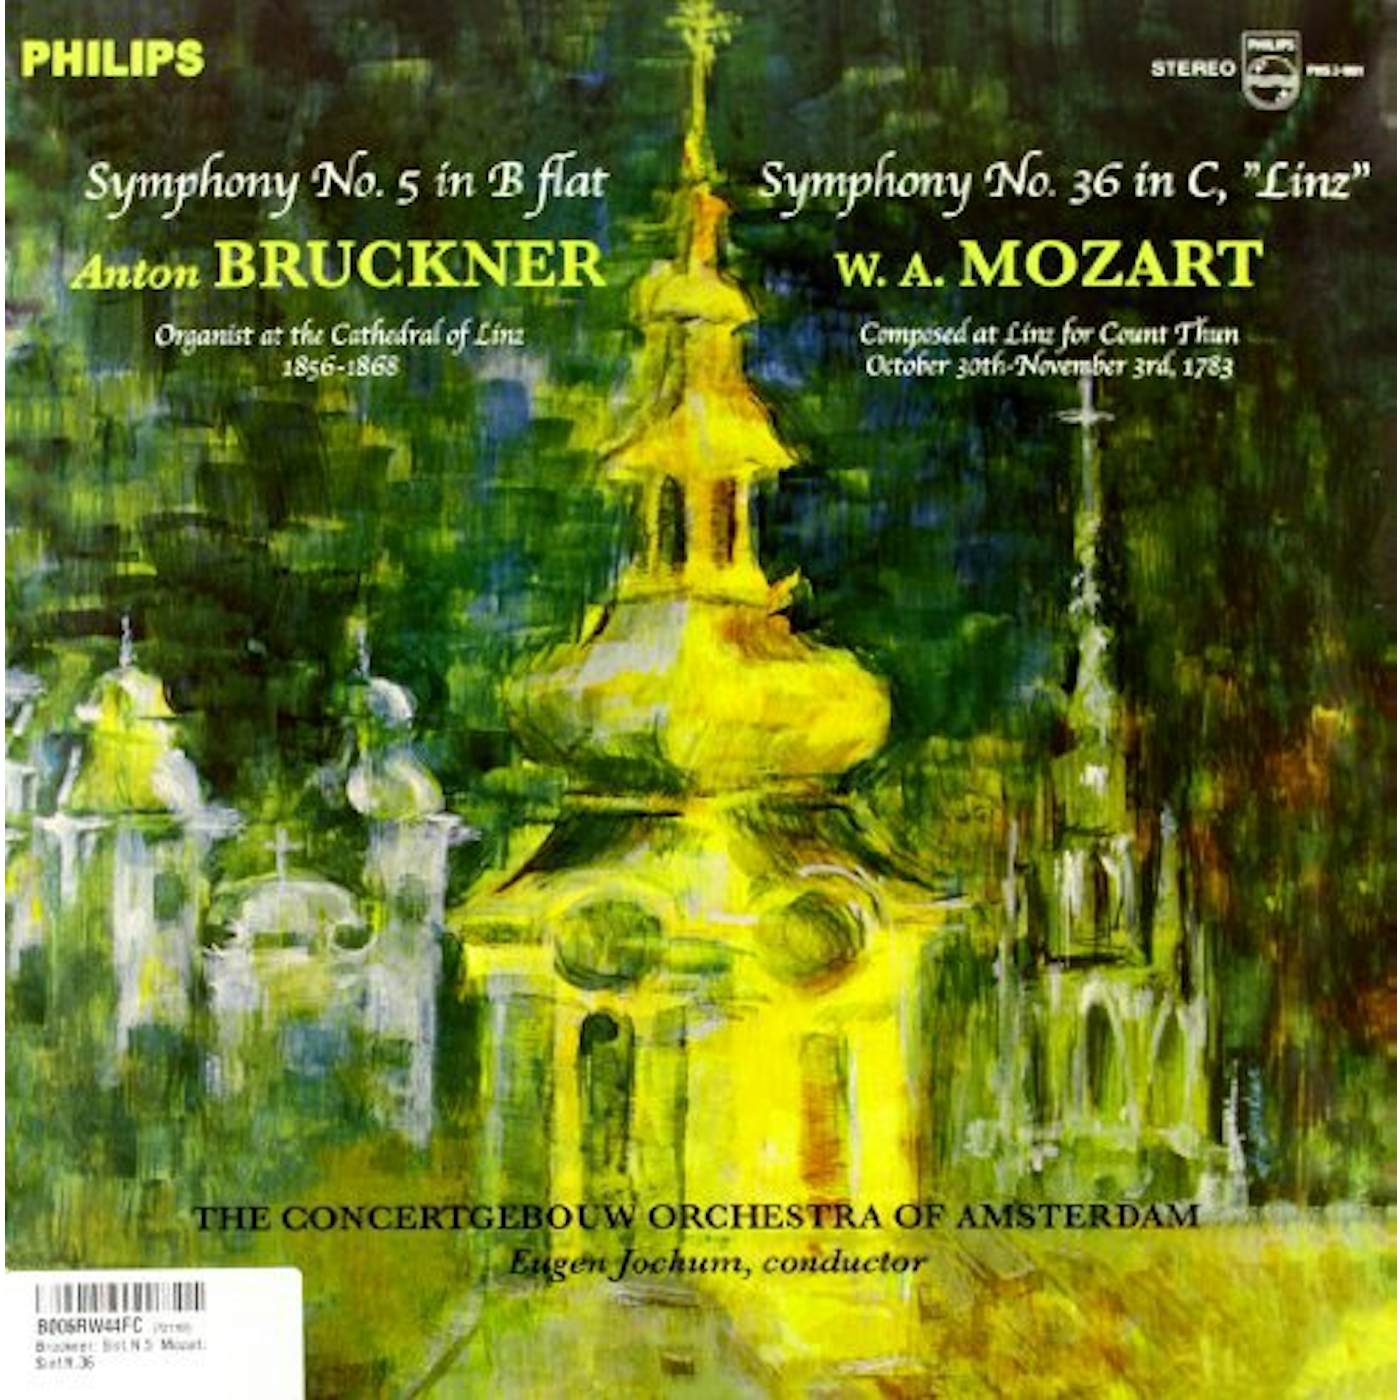 Eugen / Concertgebouw Of Amsterdam Jochum BRUCKNER: SYMPHONY 5 / MOZART: SYMPHONY 36 Vinyl Record